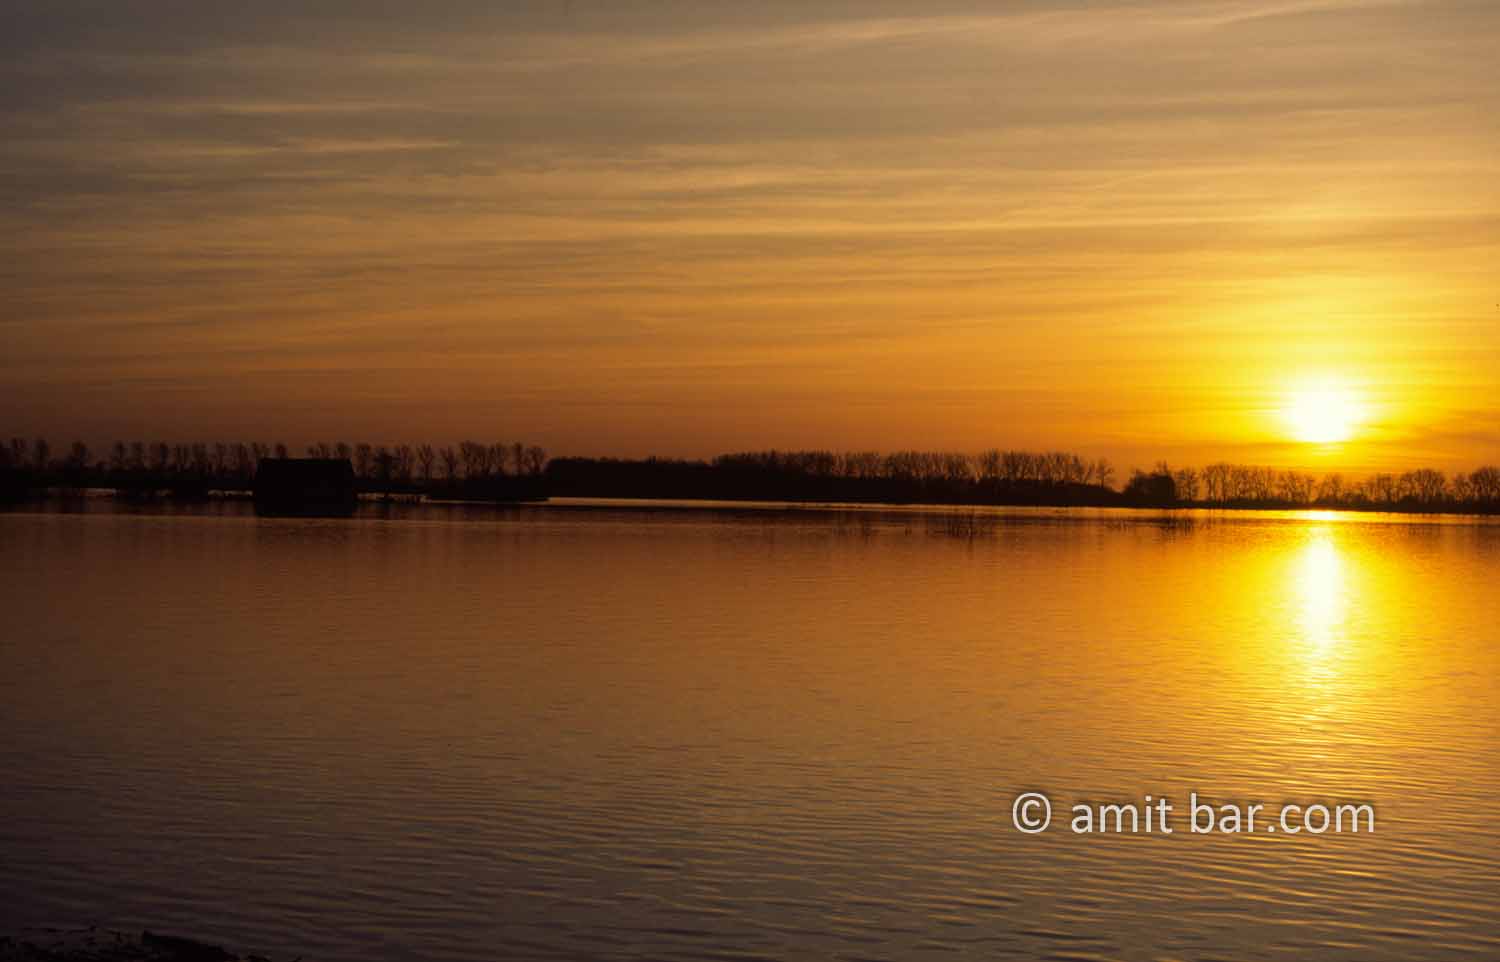 Sunset above flooded landscape at Doesburg, The Netherlands